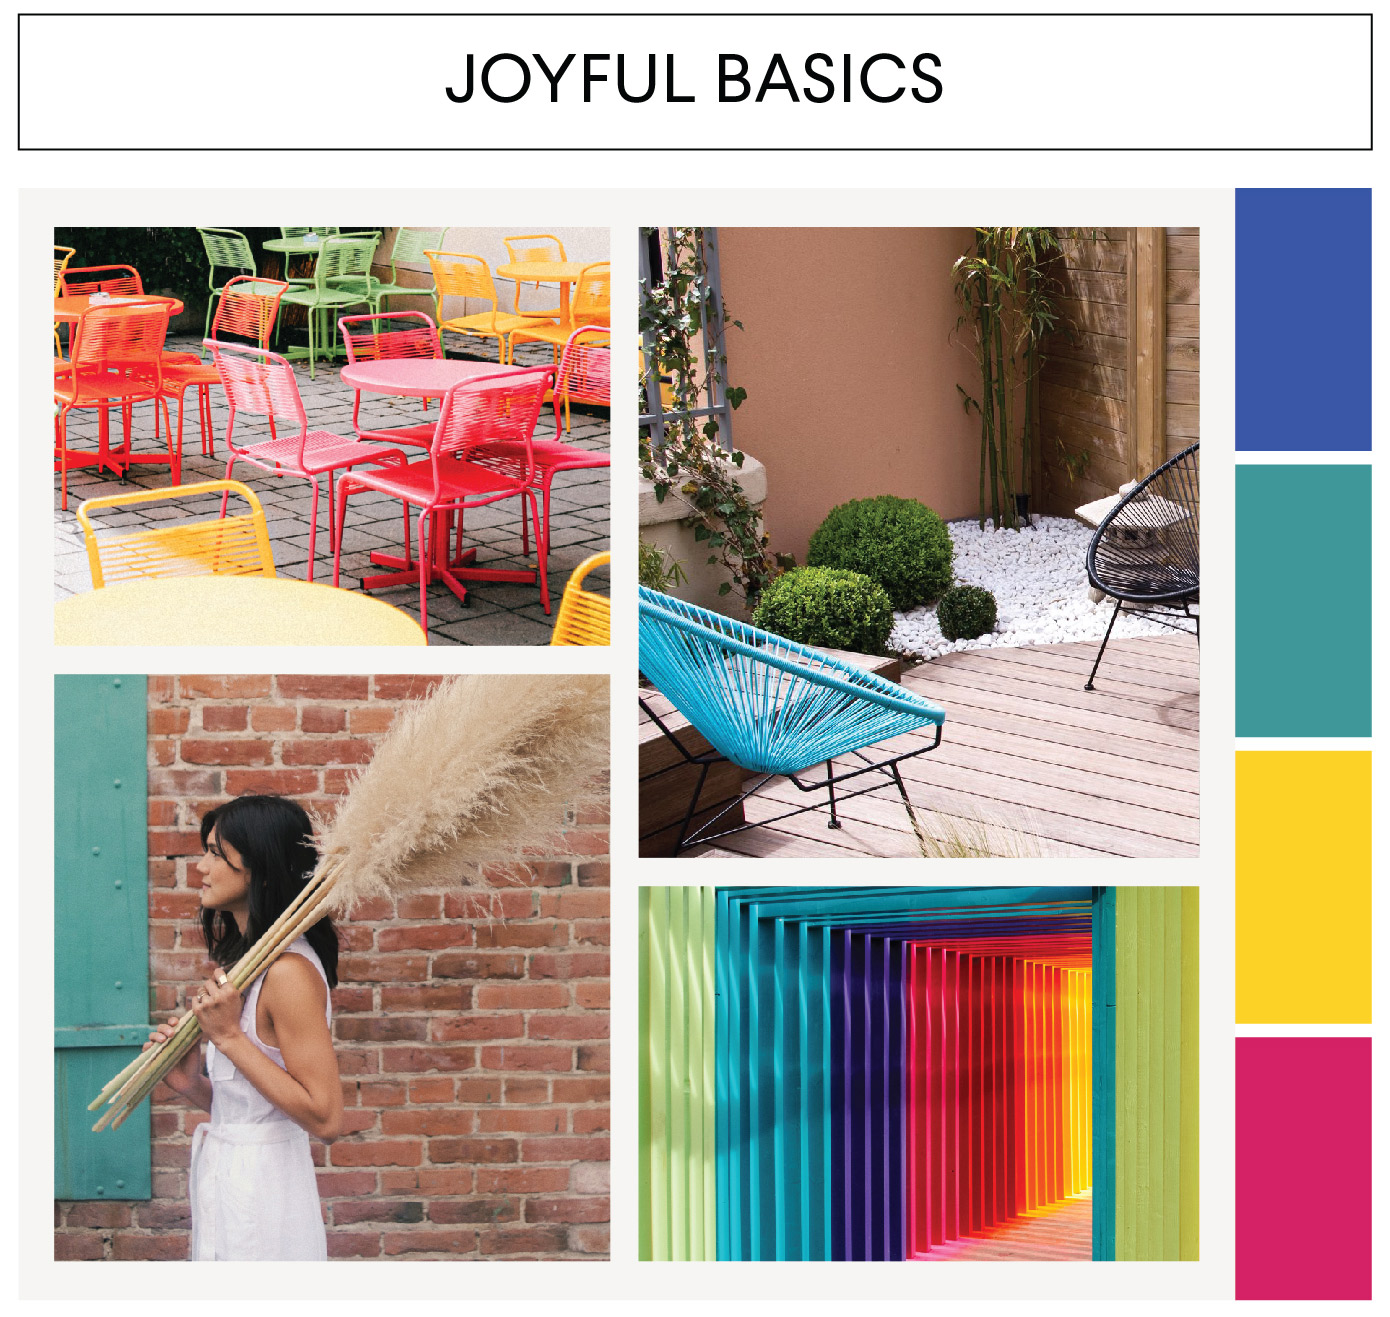 image of colorful pots that links to joyful basics page